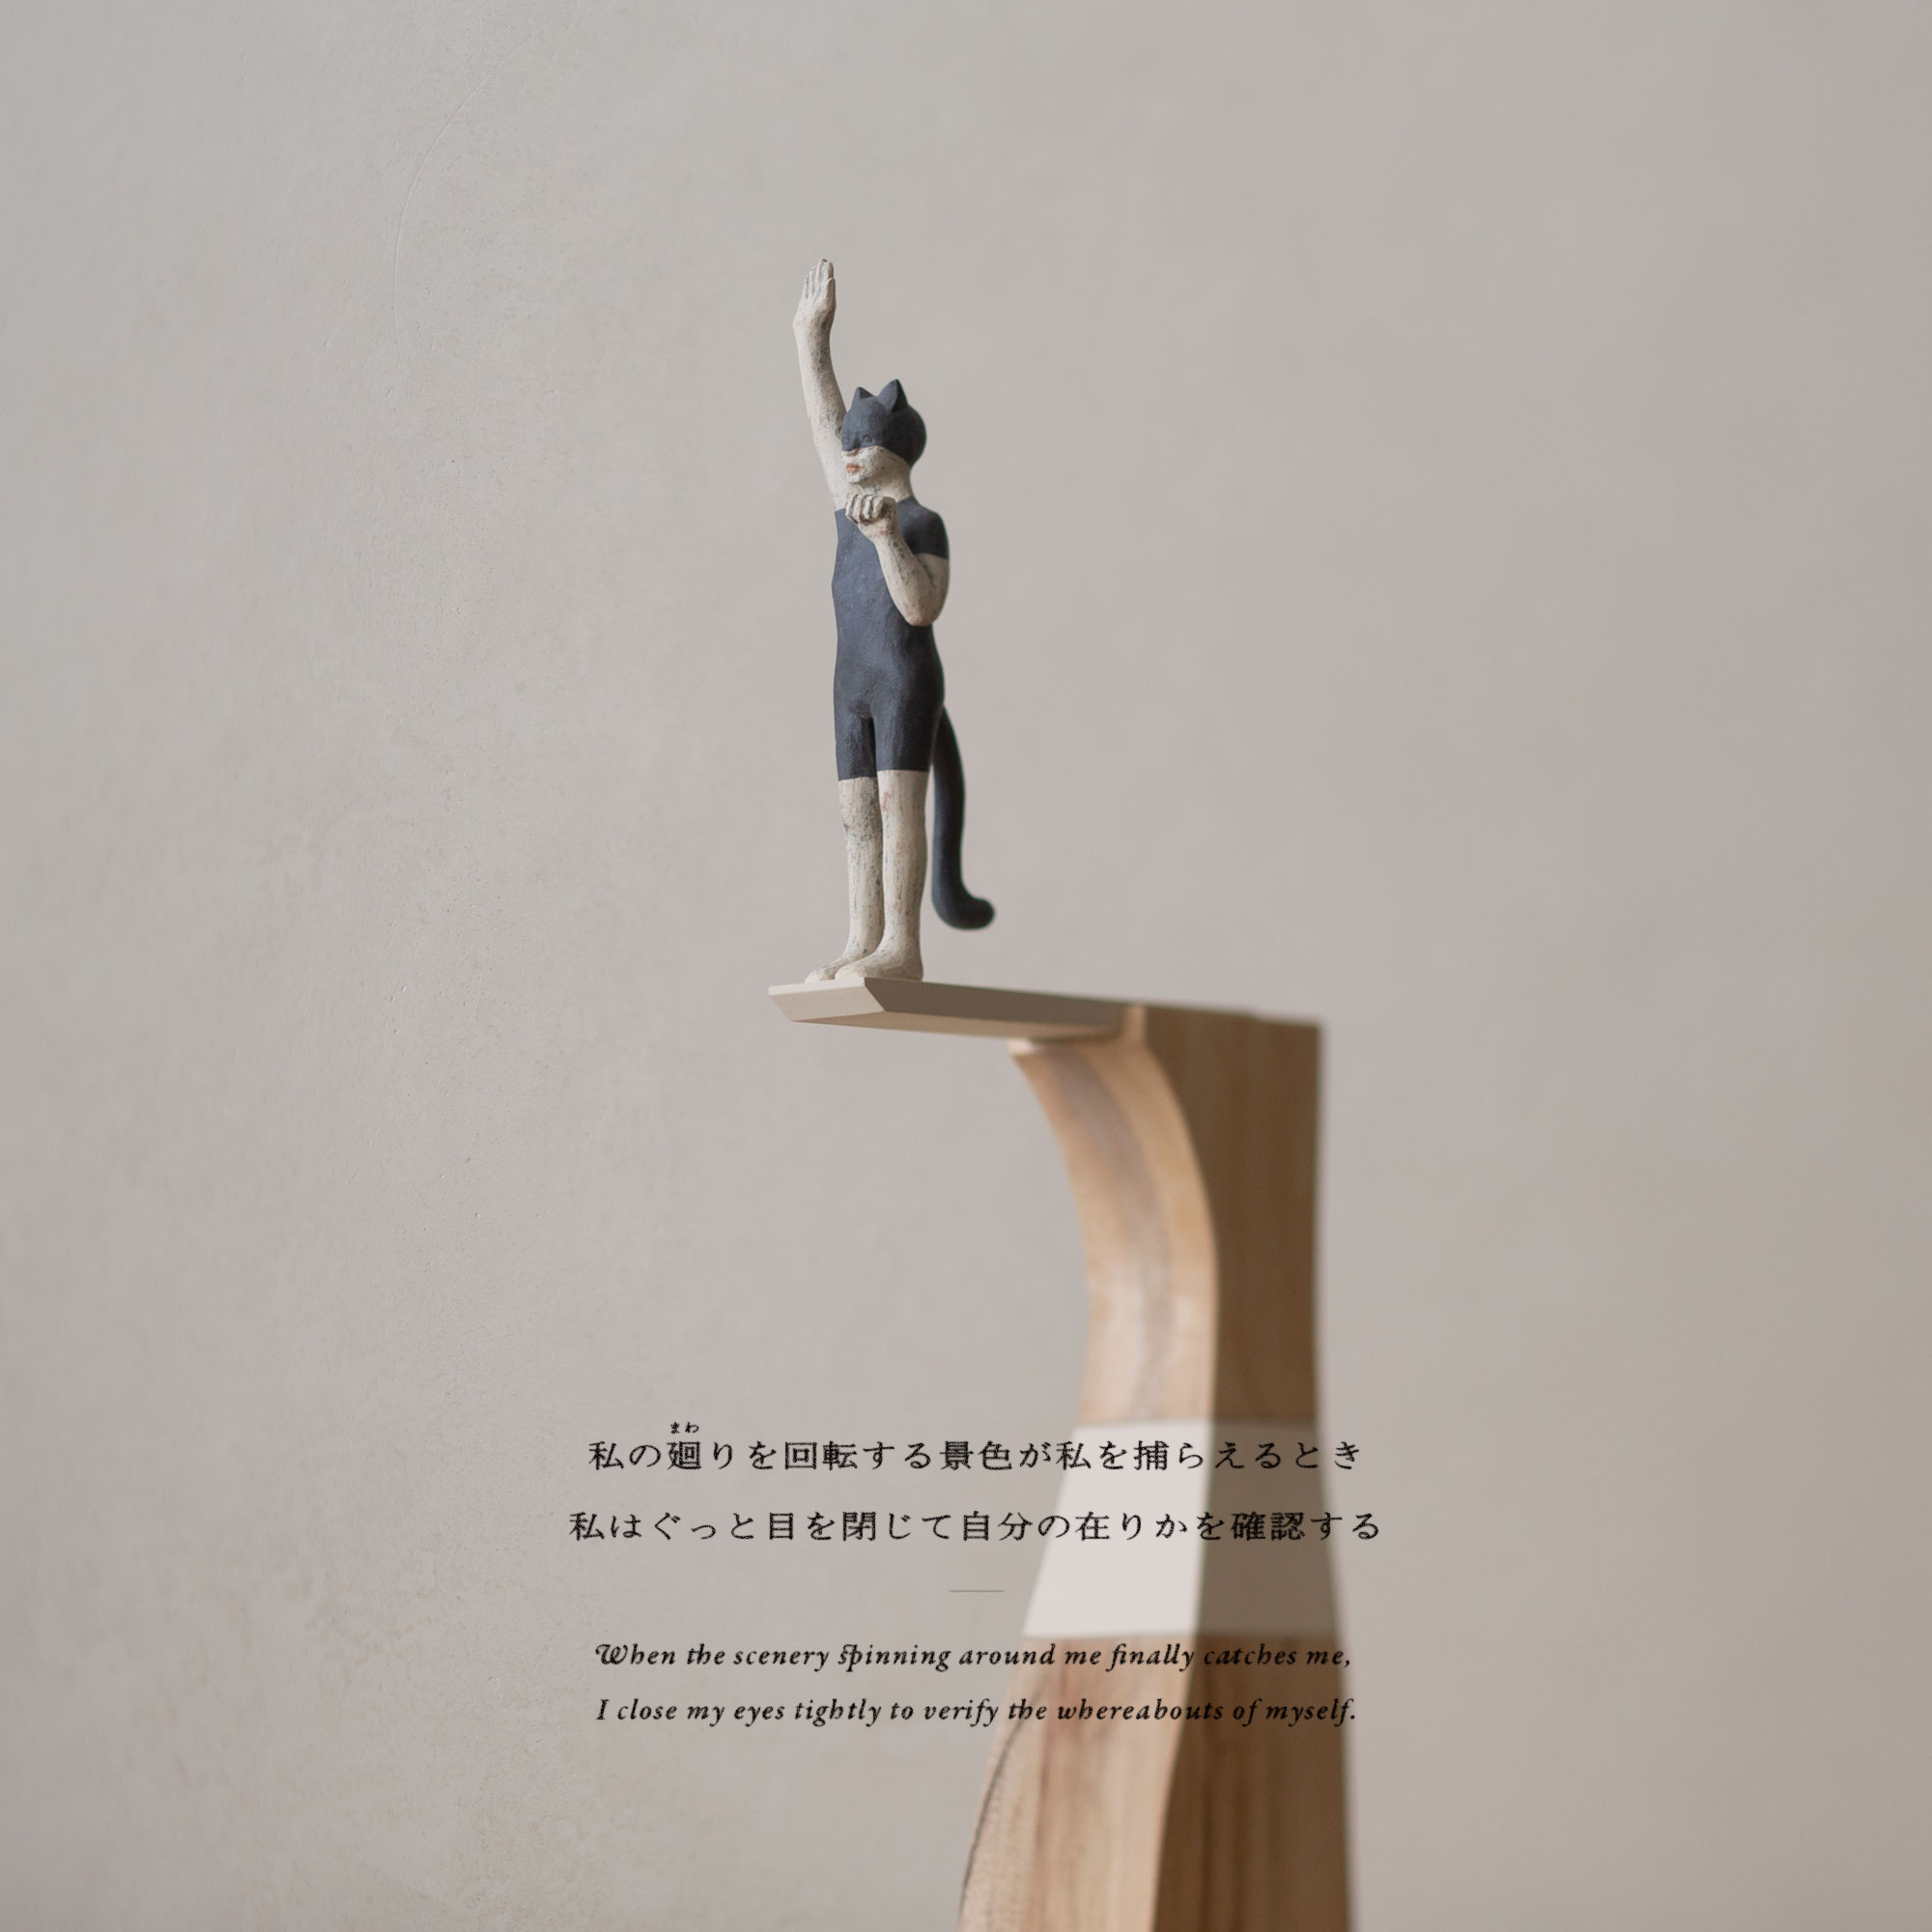 Yuta NISHIURA ”動 Motion” #01 Jan. 2020 「私の廻りを回転する景色が私を捕らえるとき 私はぐっと目を閉じて自分の在りかを確認する」